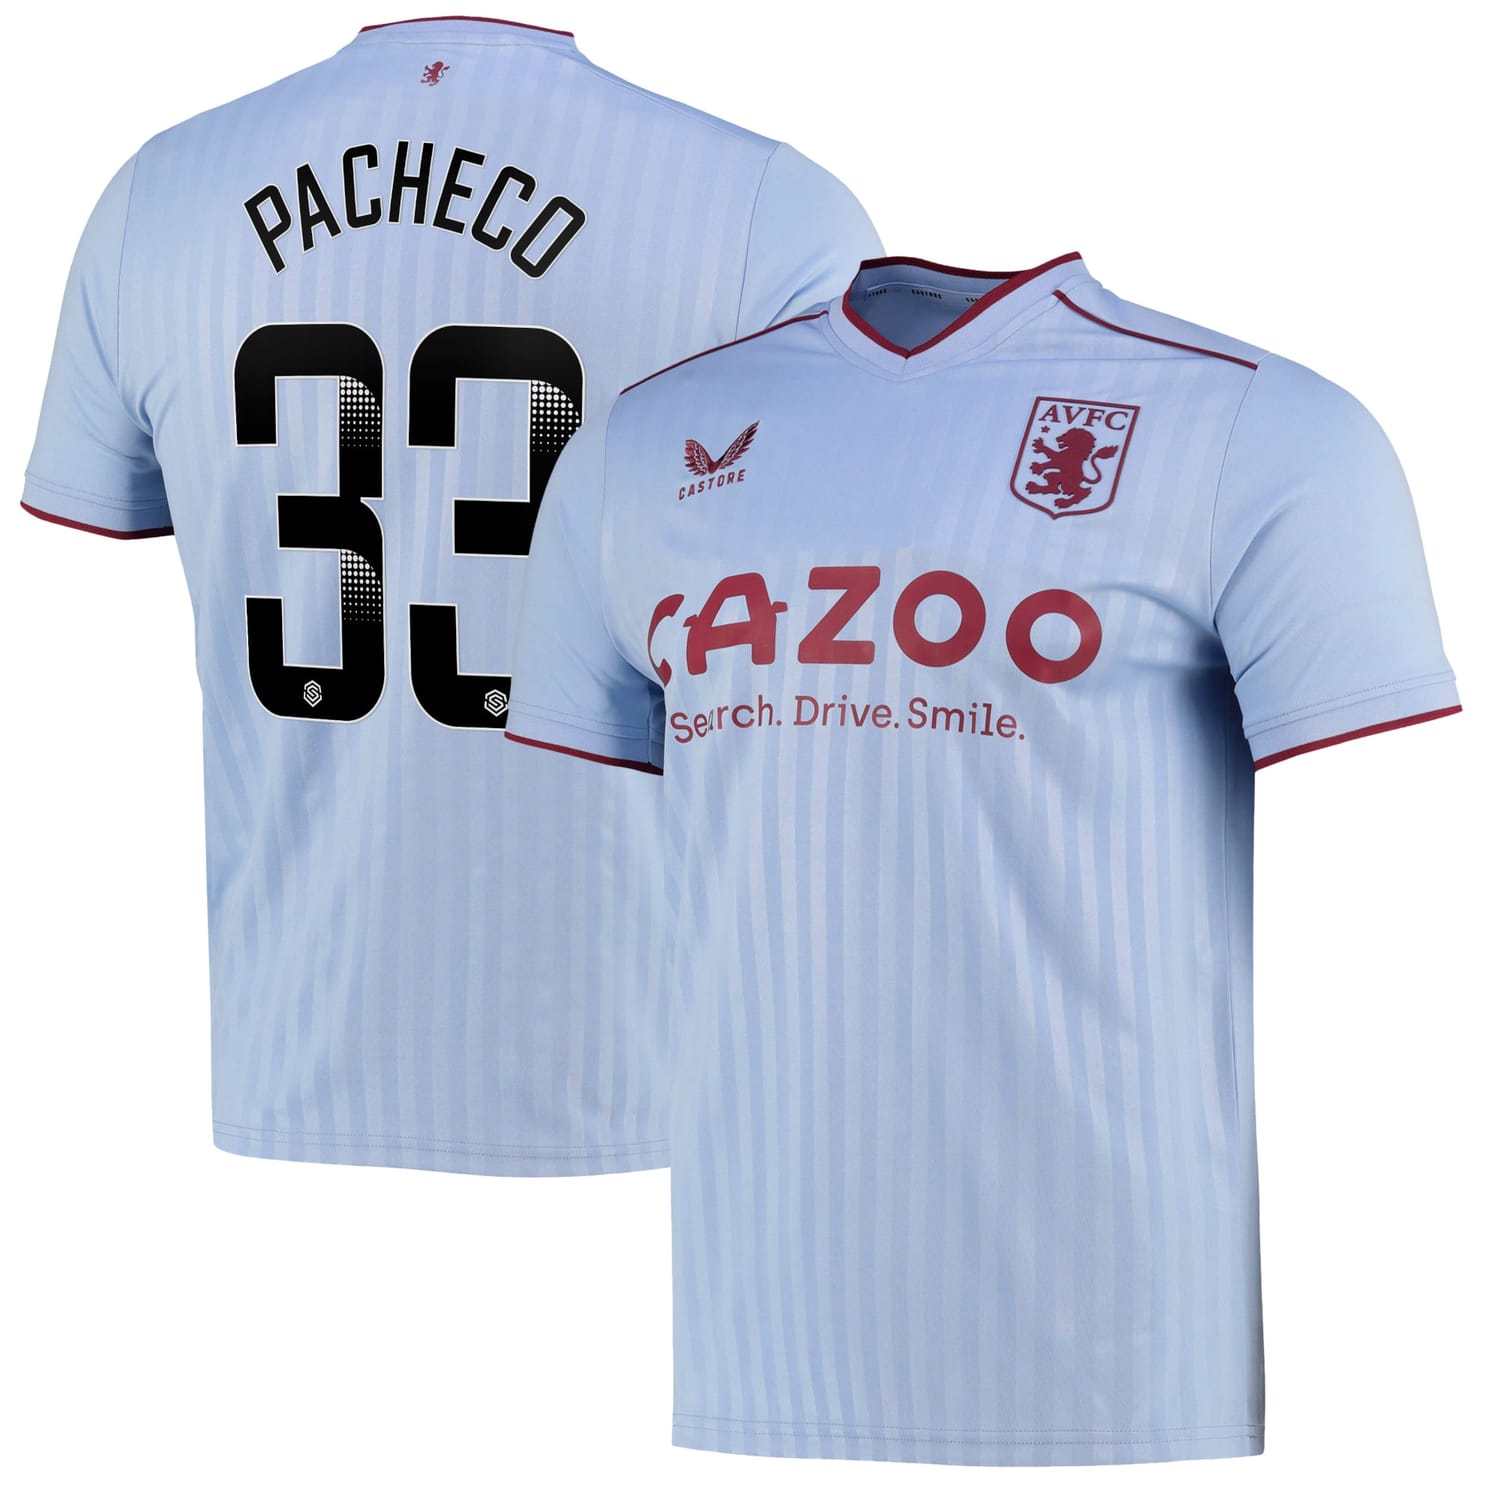 Premier League Aston Villa Away WSL Jersey Shirt 2022-23 player Mayumi Pacheco 33 printing for Men